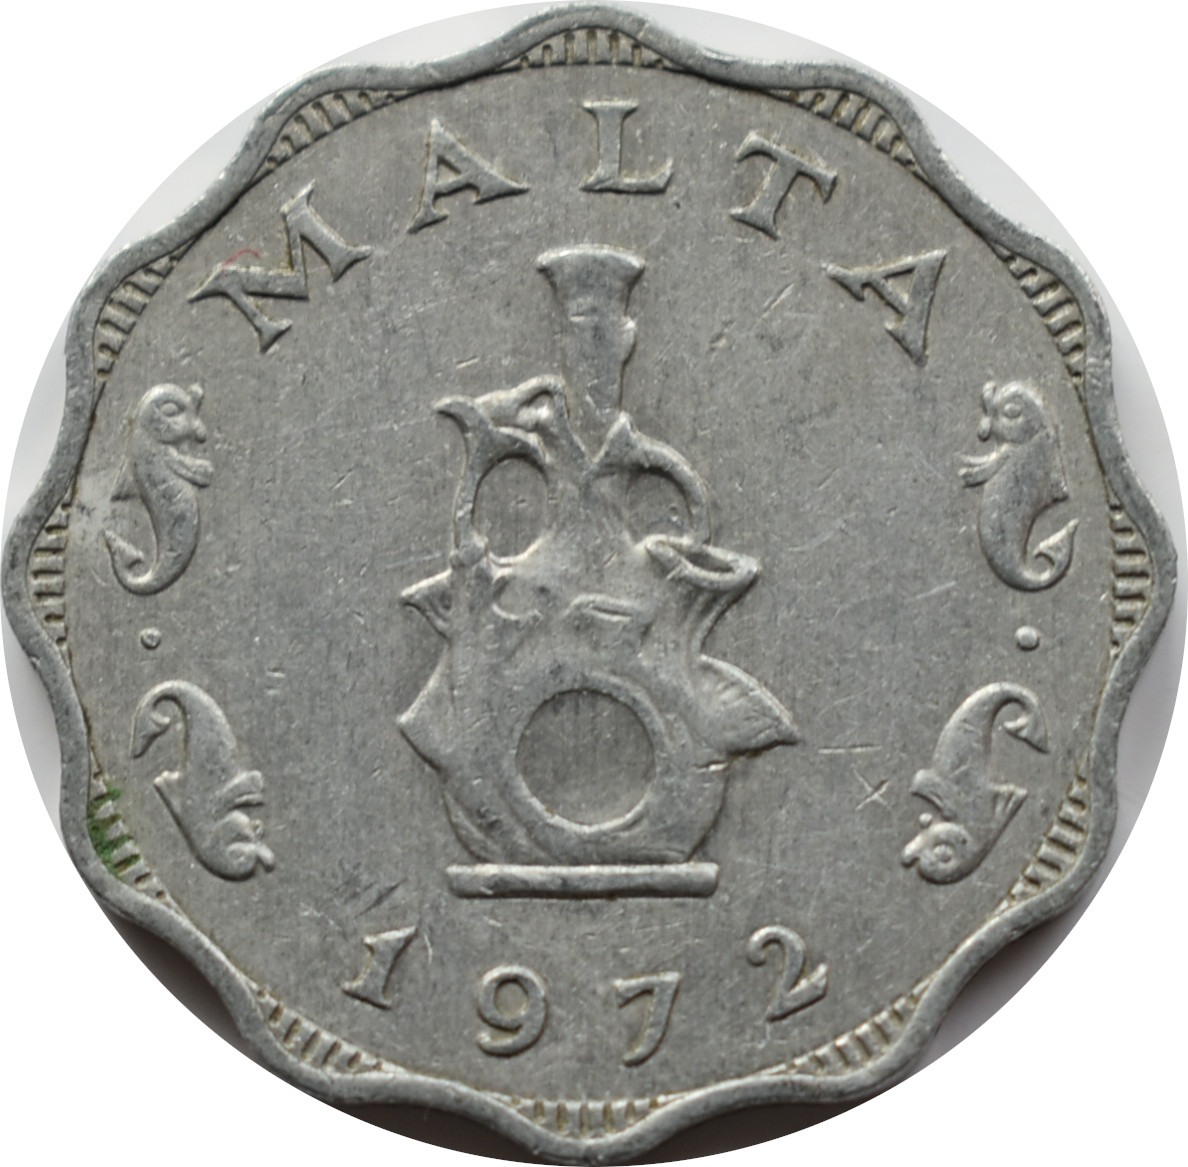 Malta 5 Mils 1972